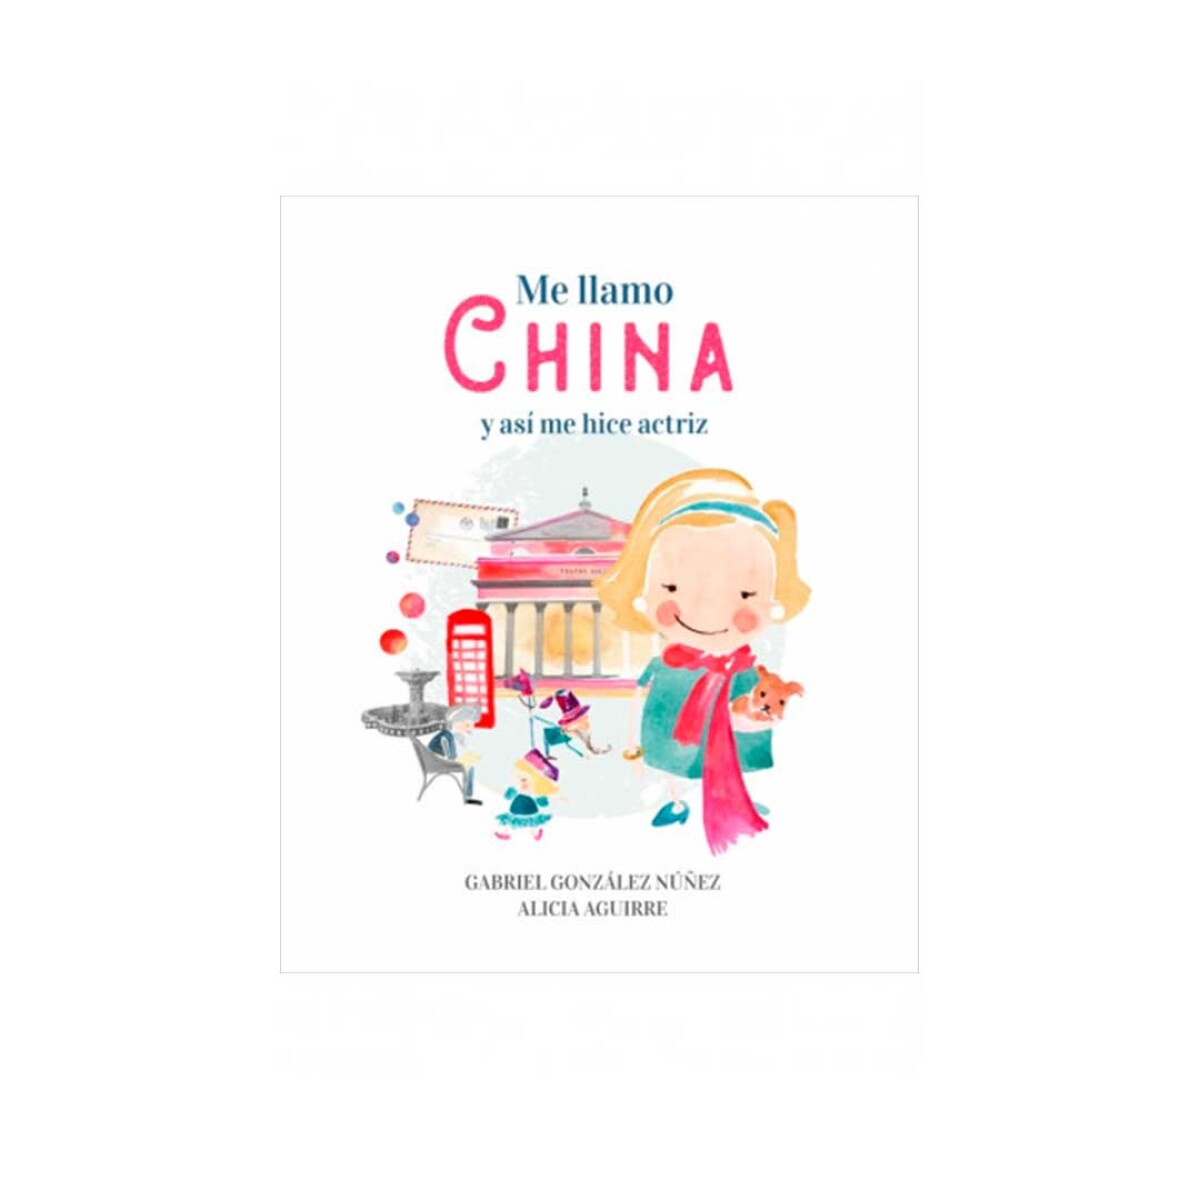 Libro infantil Me llamo China personajes emblemáticos - 001 